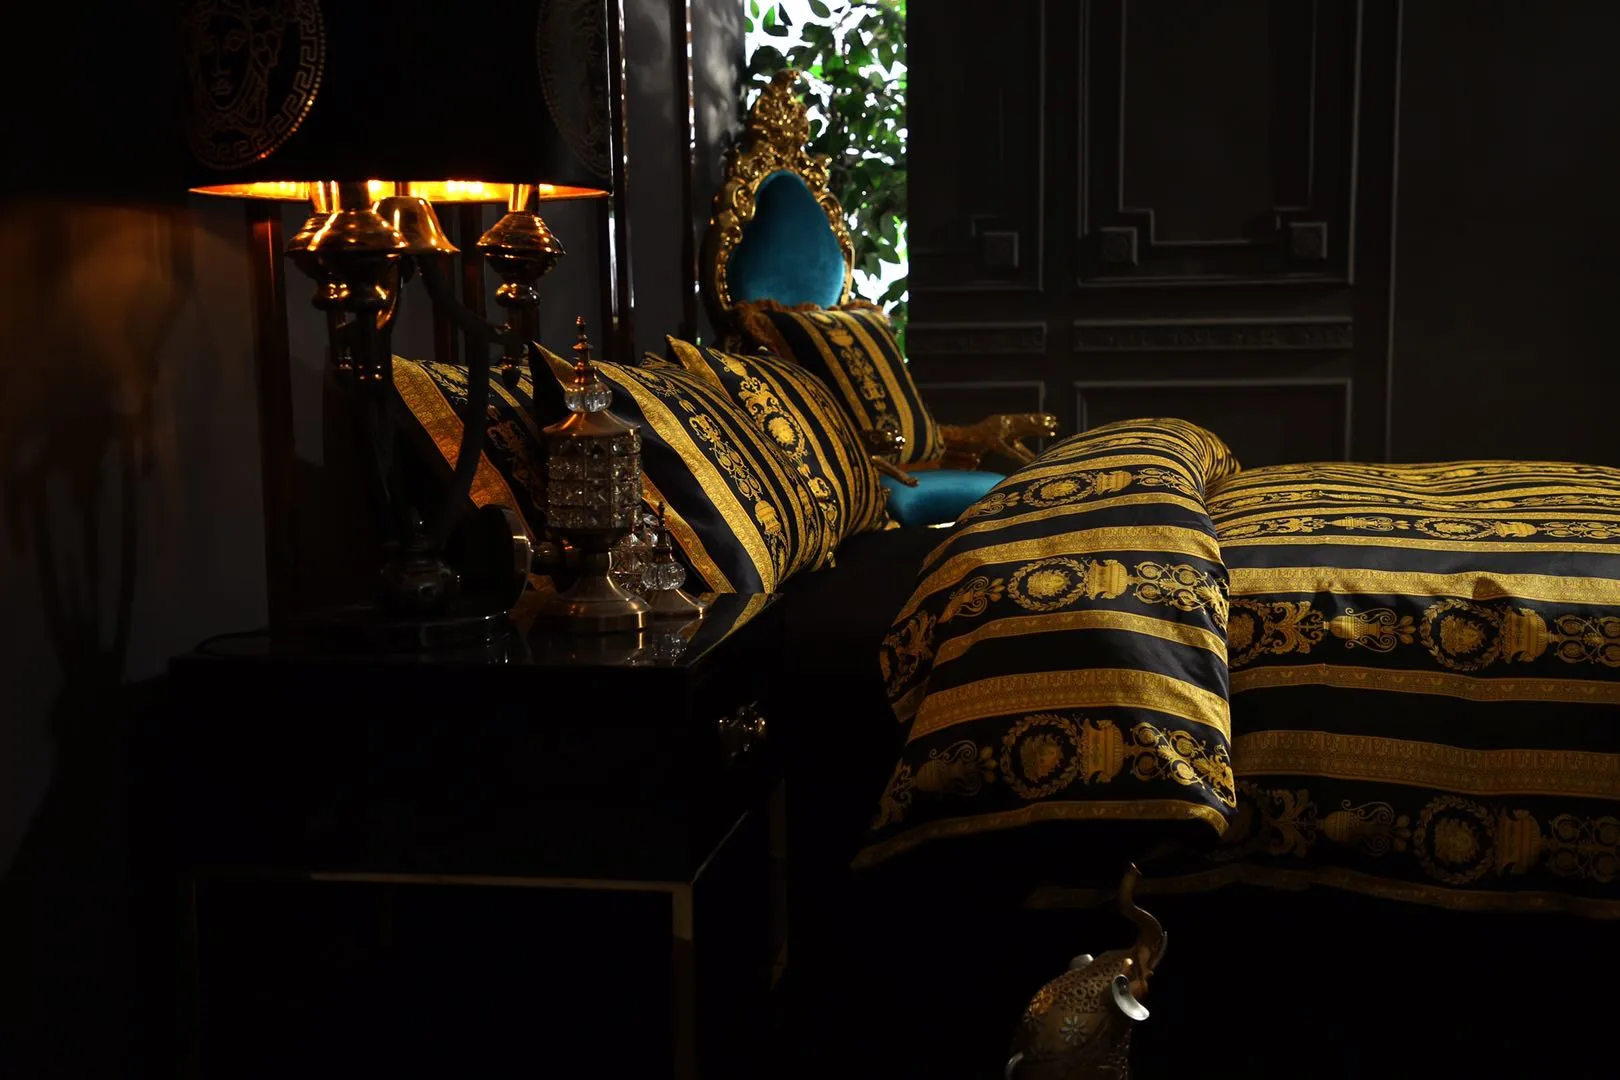 Designer Luxury Black Bedding Sets 100 Cotton Woven king Size European Style Quilt Cover Pillow Cases Bed Sheet Duvet Comfort240R